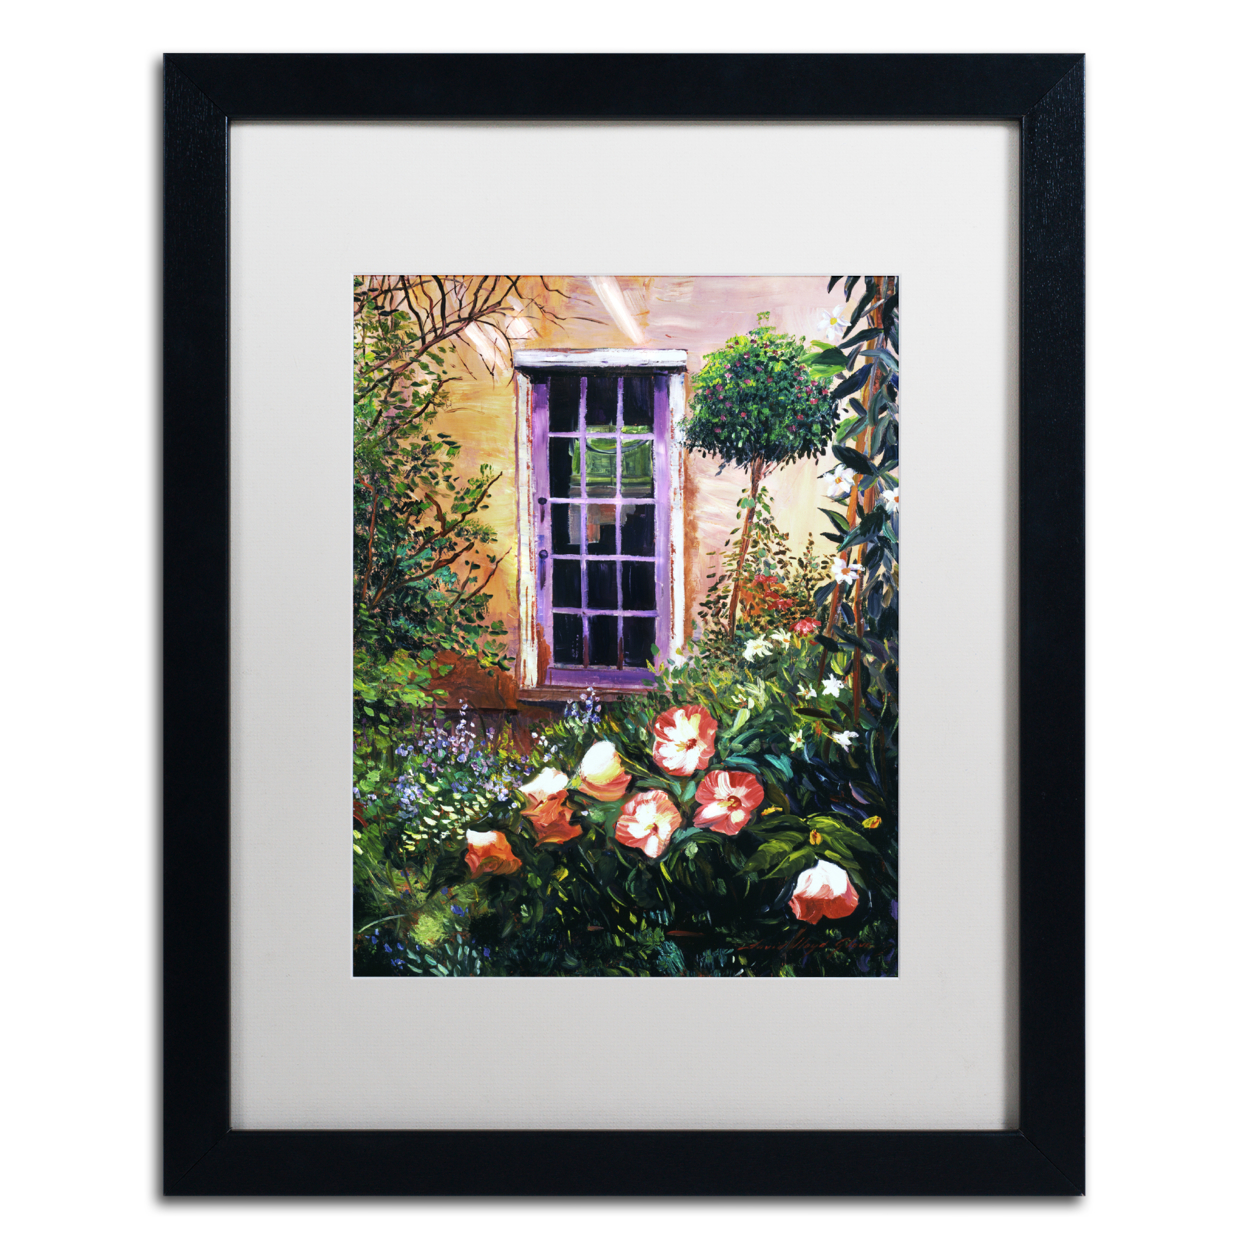 David Lloyd Glover 'Tuscany Villa Garden' Black Wooden Framed Art 18 X 22 Inches